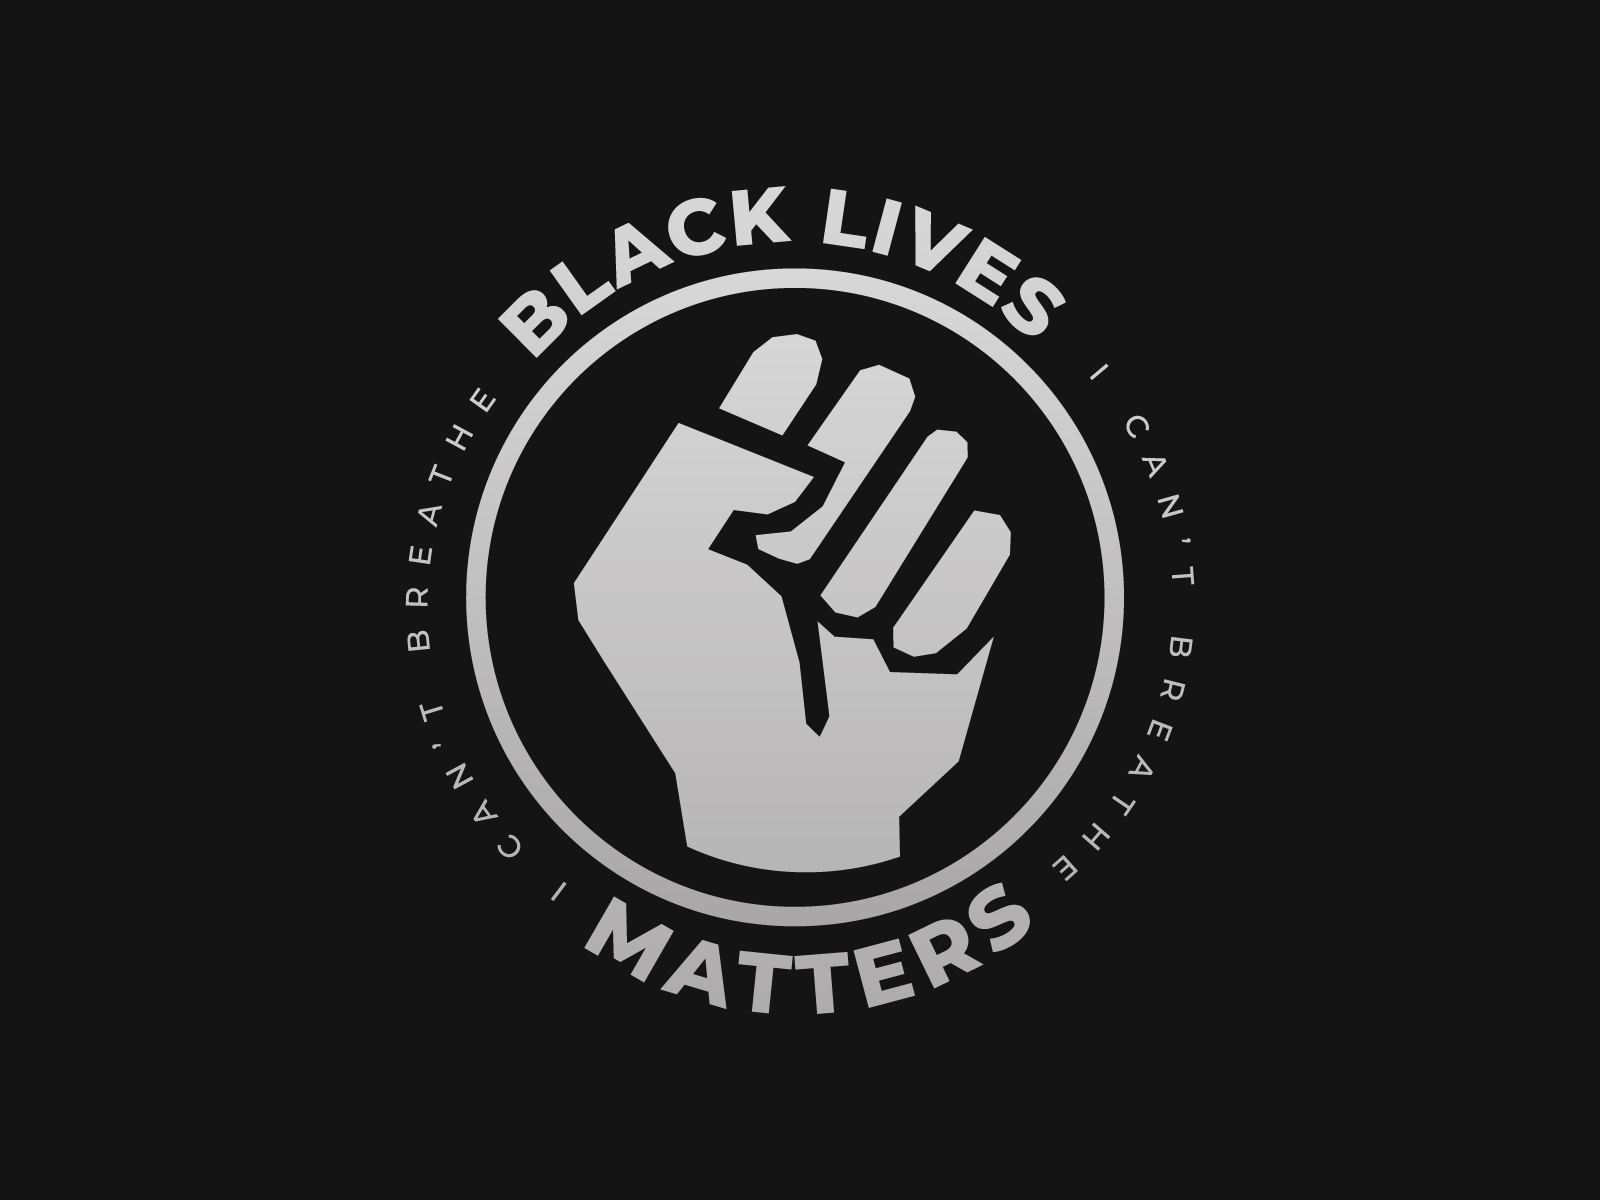 Black Lives Matter By Rahal Nejraoui On Dribbble